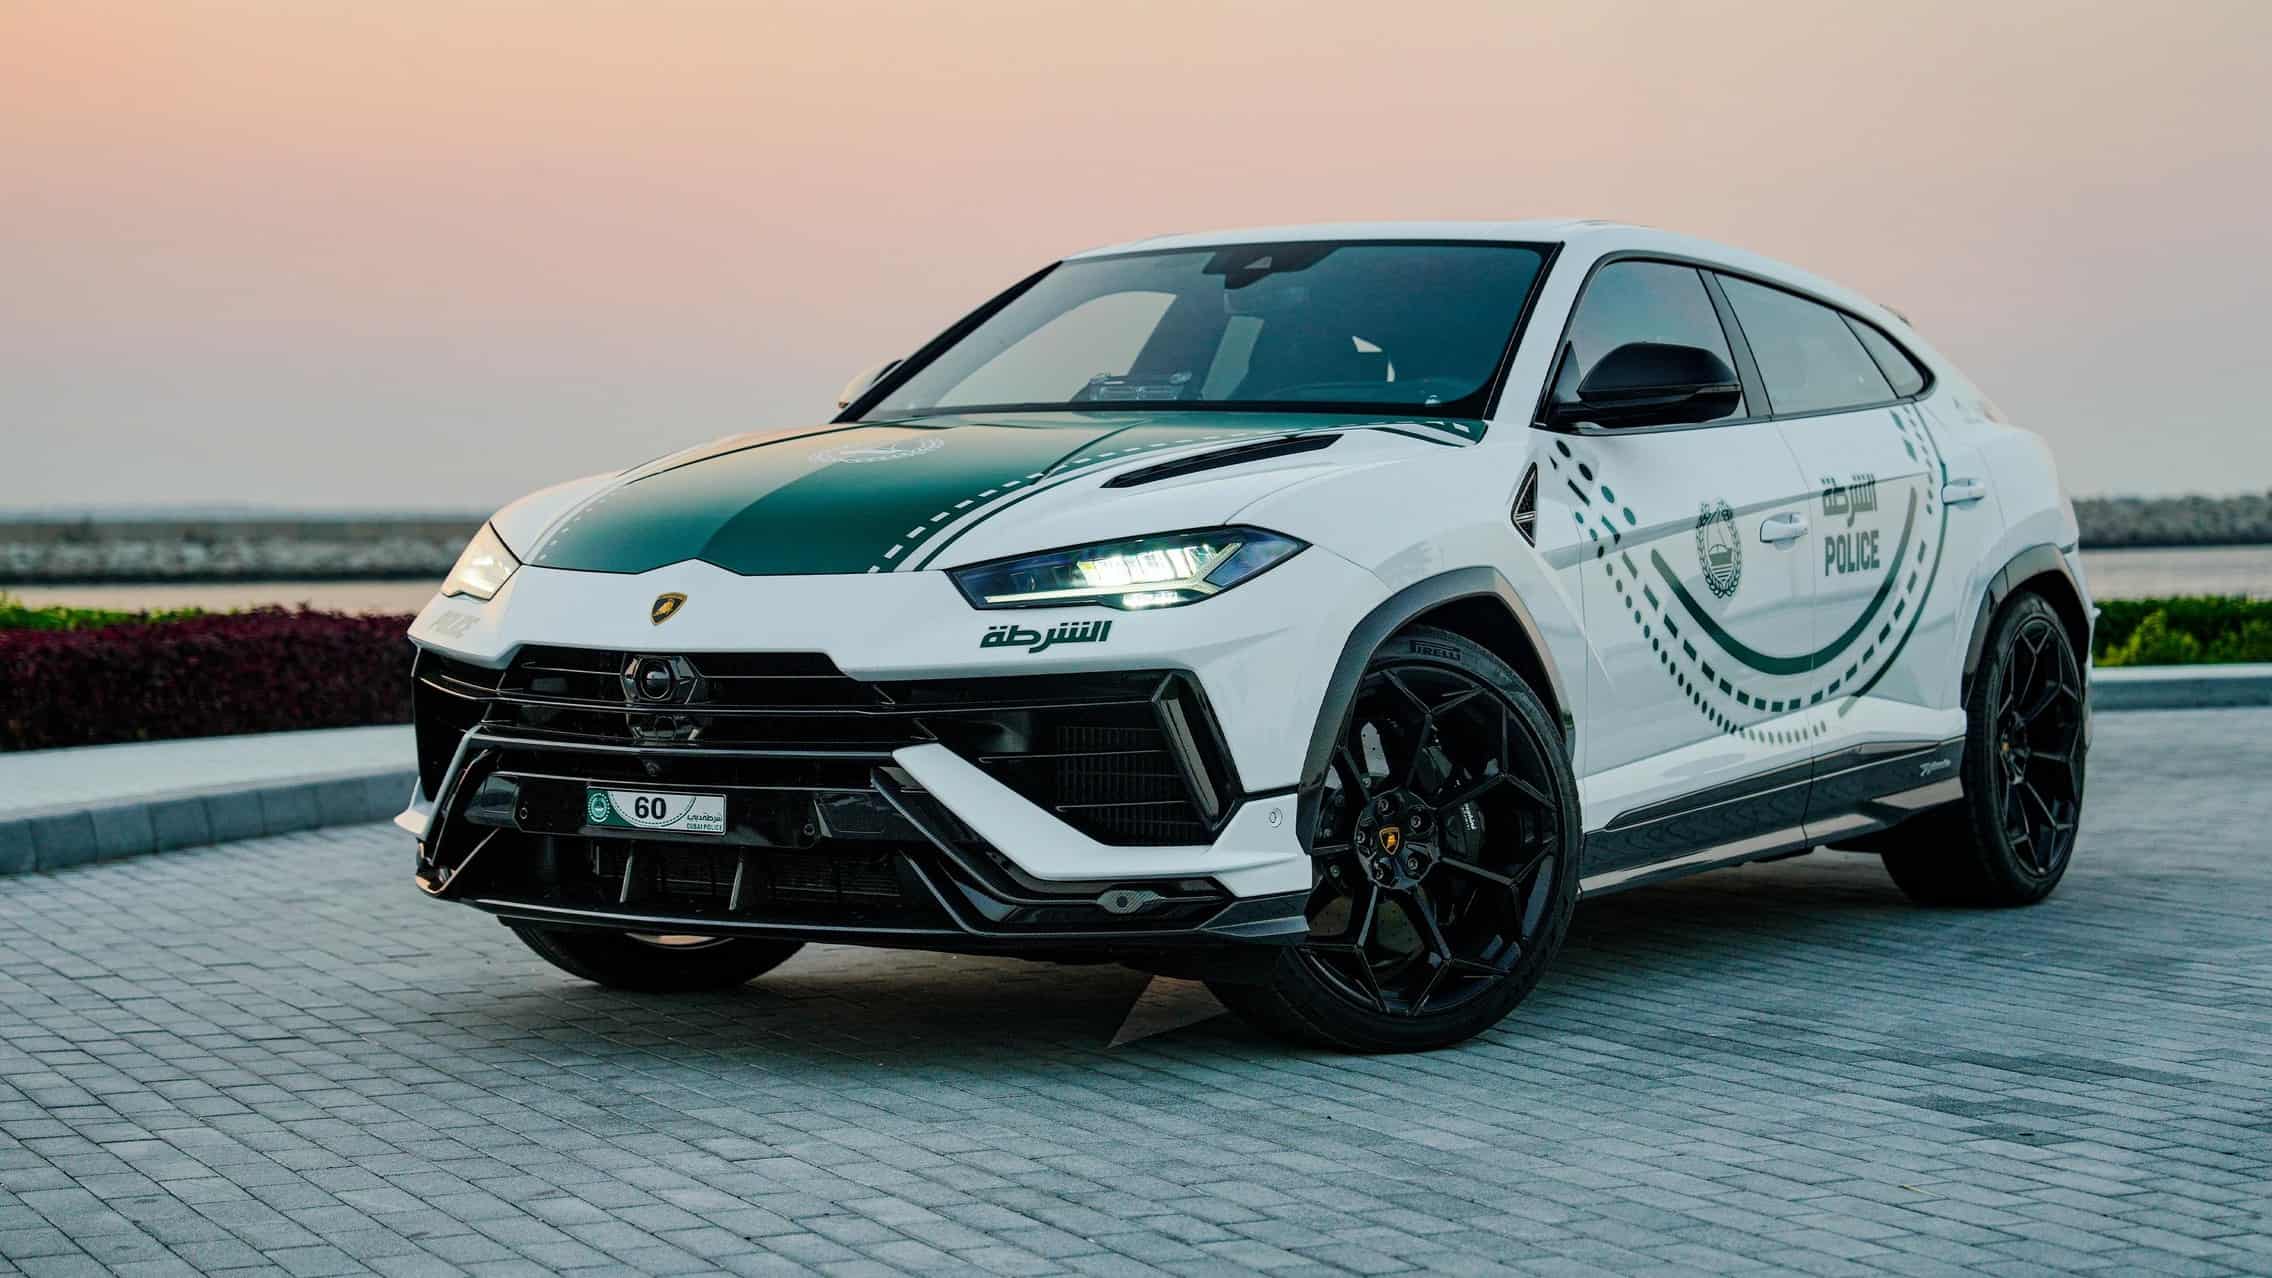 Dubai Police Fleet Welcomes the Addition of Lamborghini Urus Performante